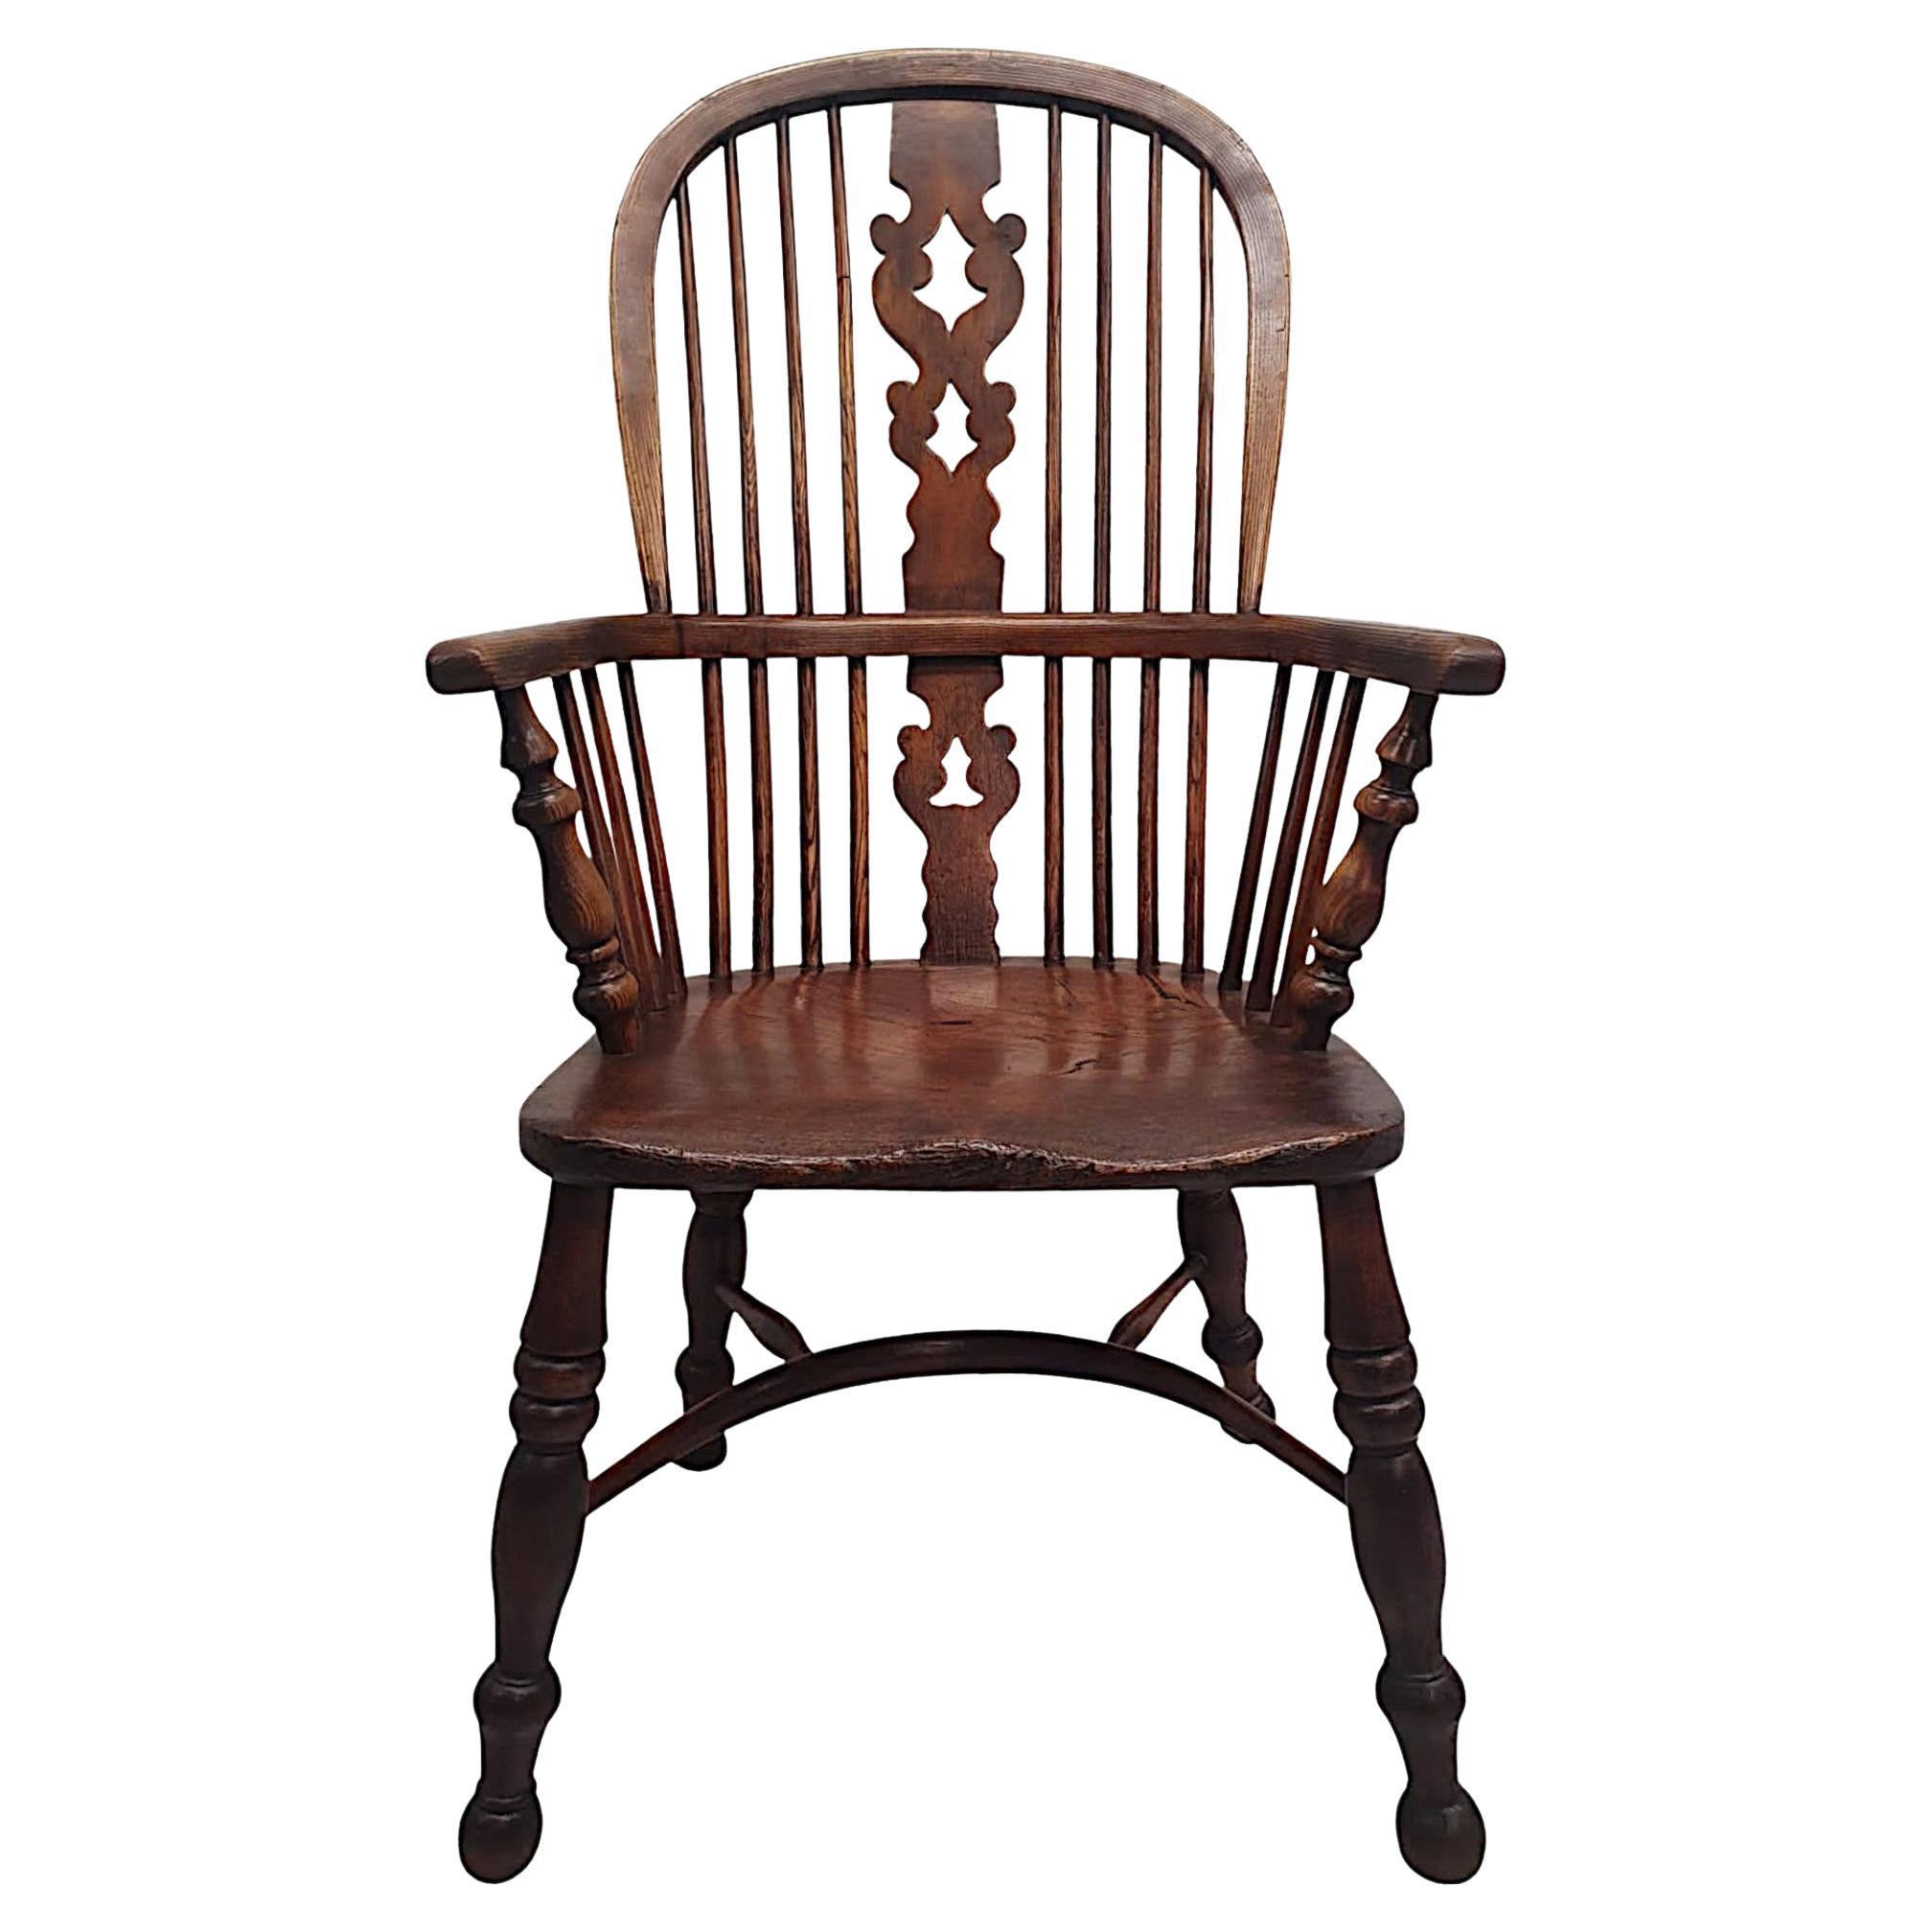 Very Rare and Fine 19th Century High Back Windsor Armchair